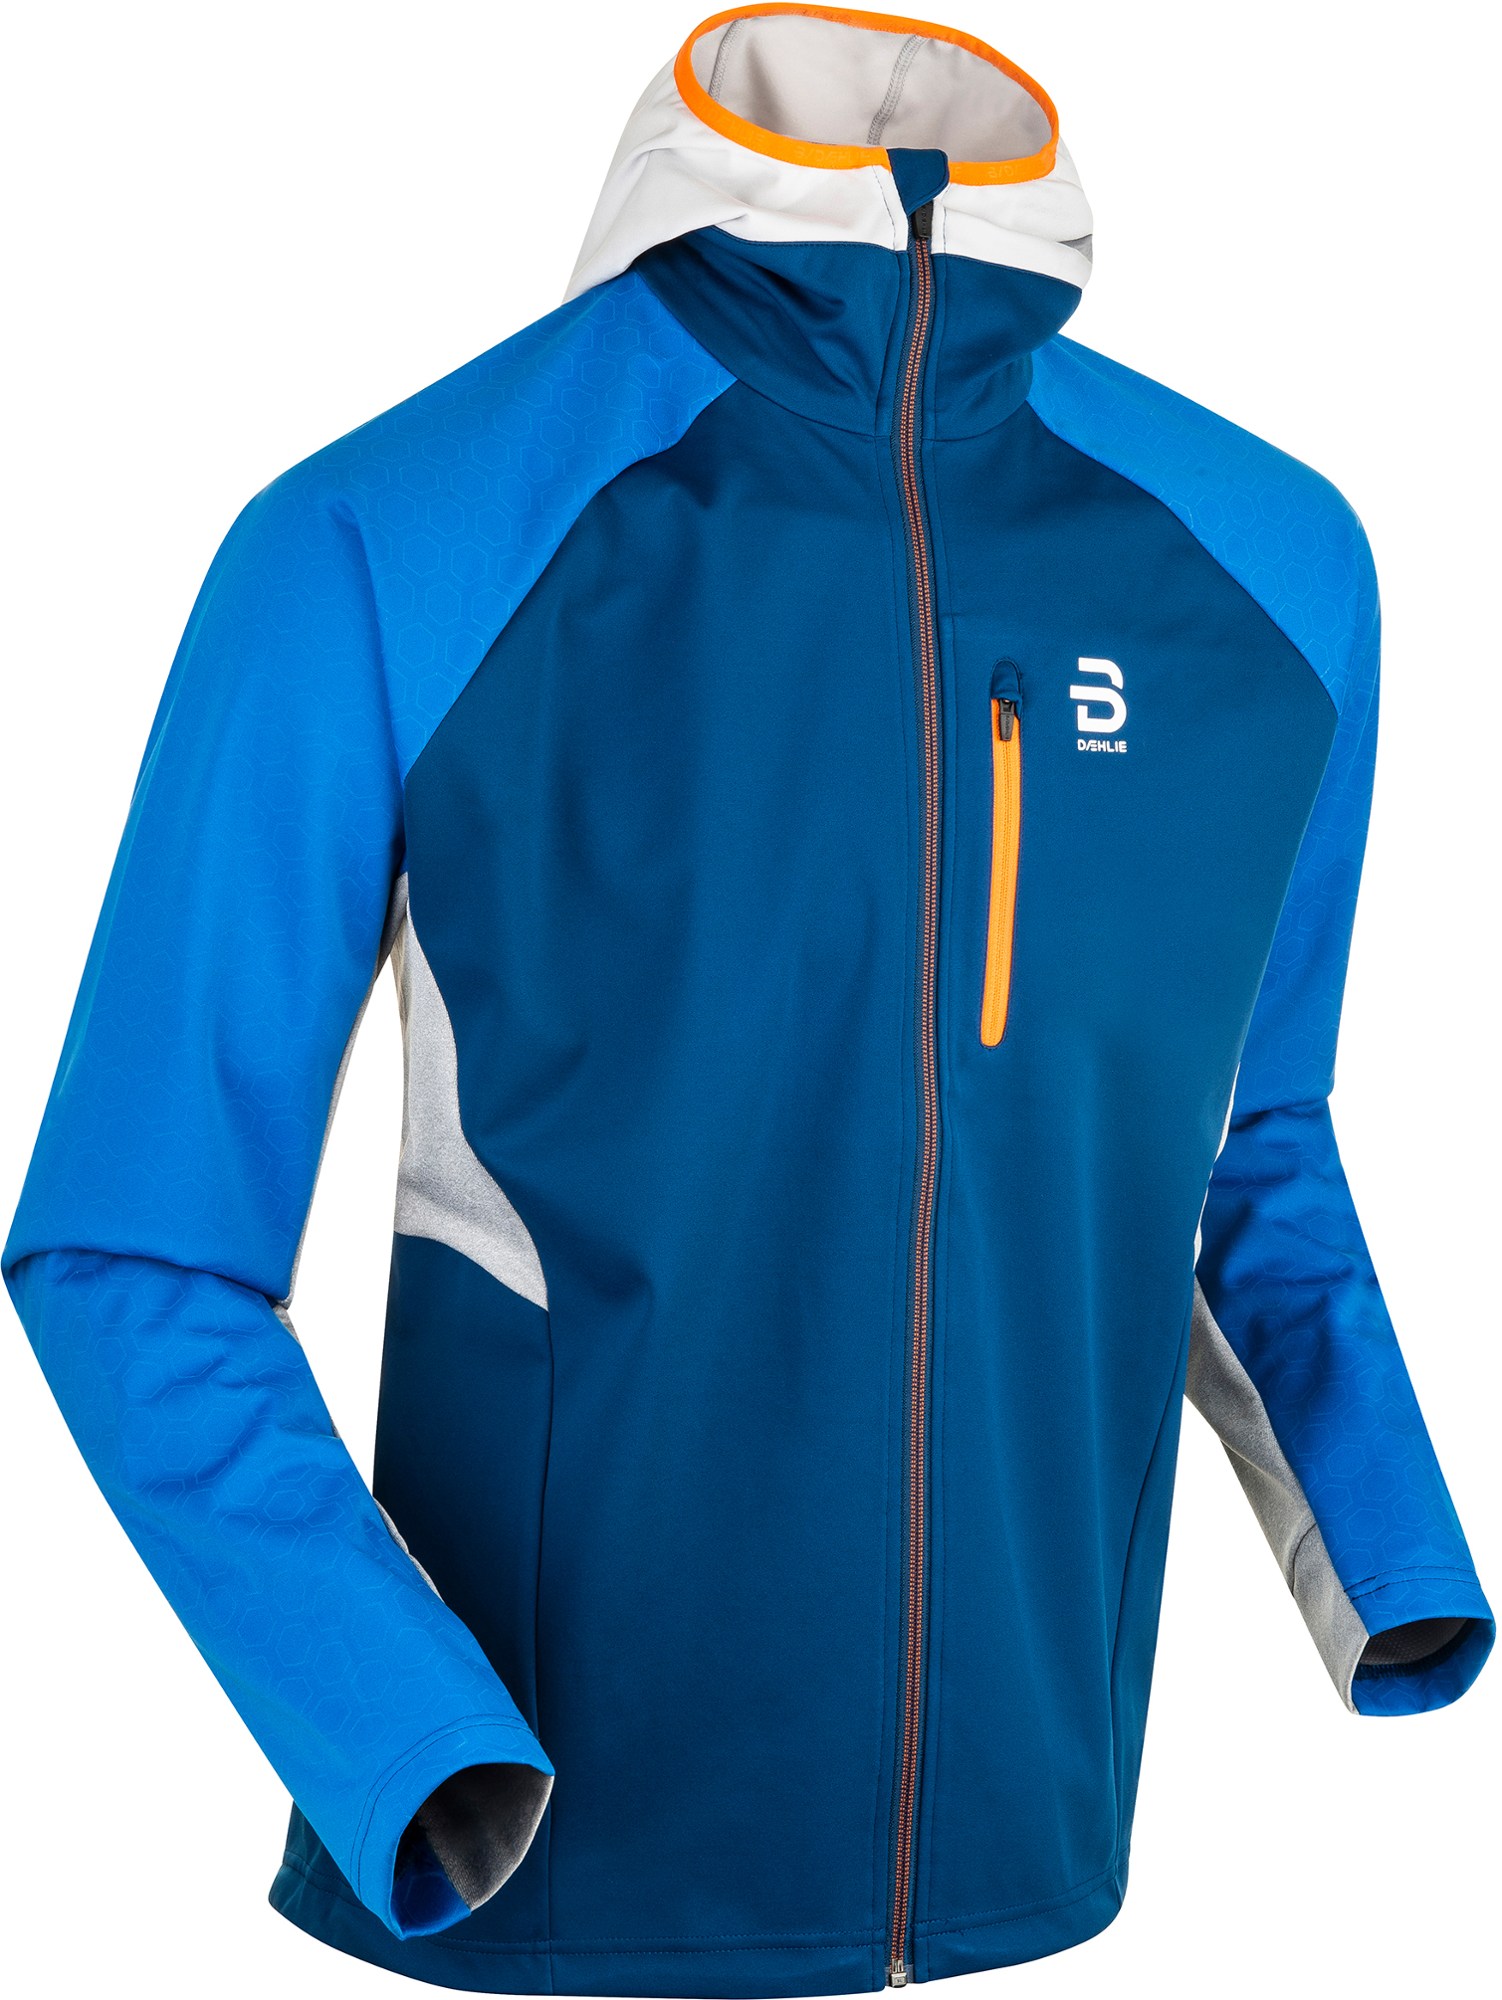 Куртка North - Мужская Bjorn Daehlie, синий куртка мужская north оранжевый неон размер xs